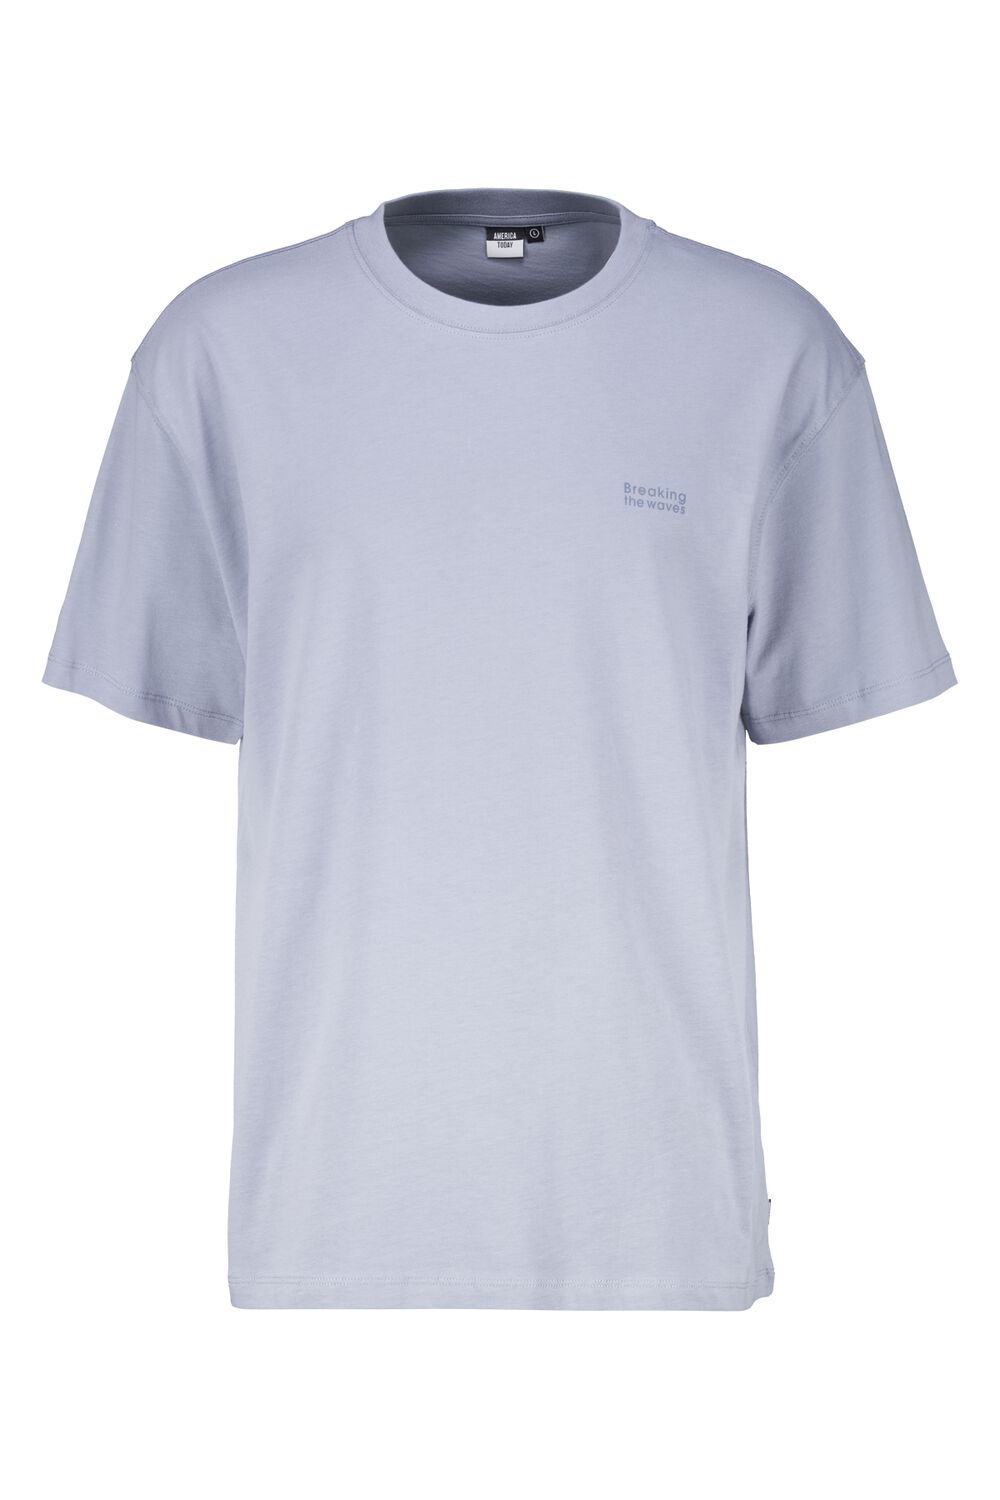 America Today T-shirt Esper met backprint washed blue